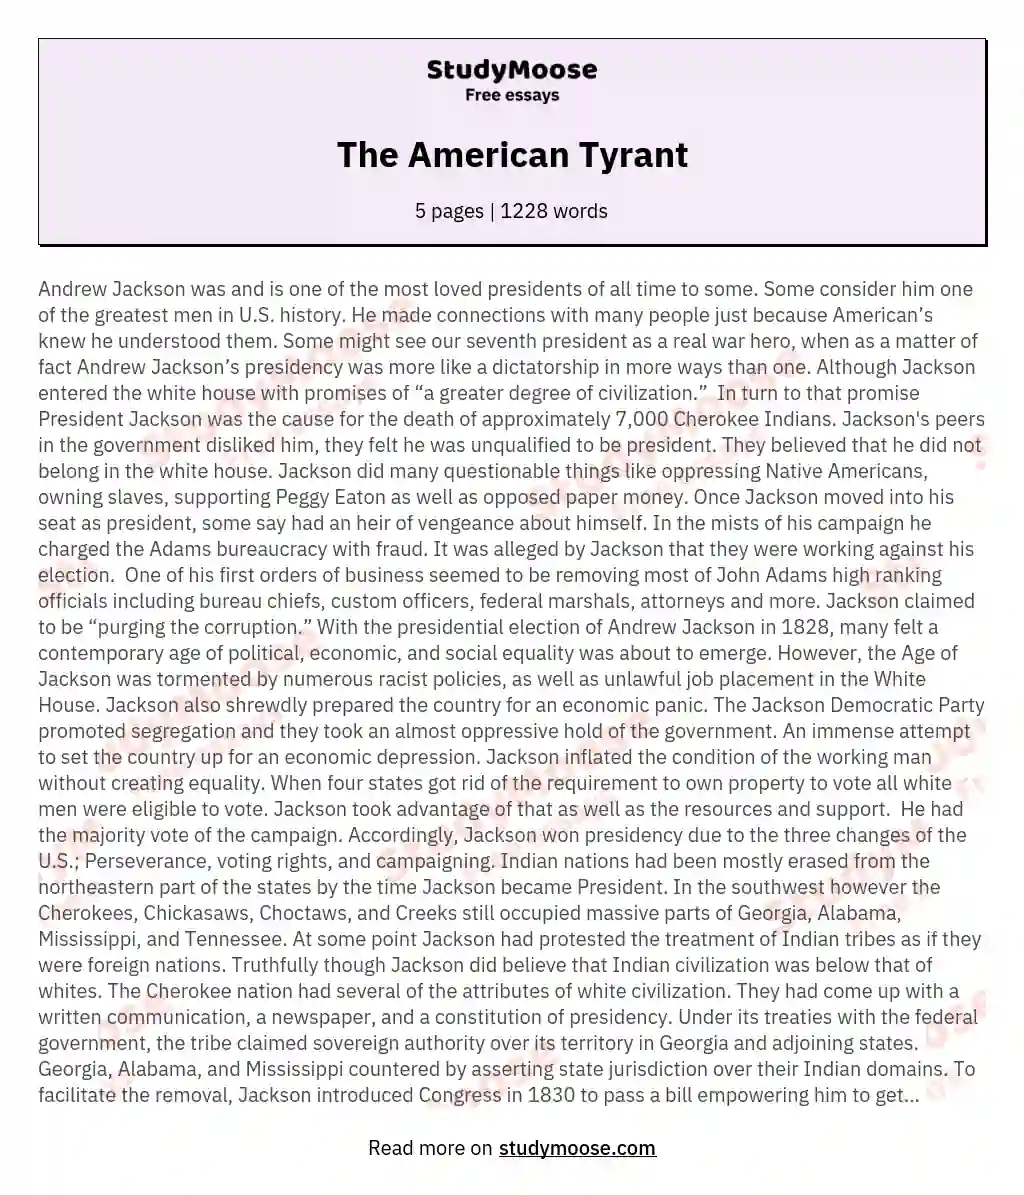 The American Tyrant essay